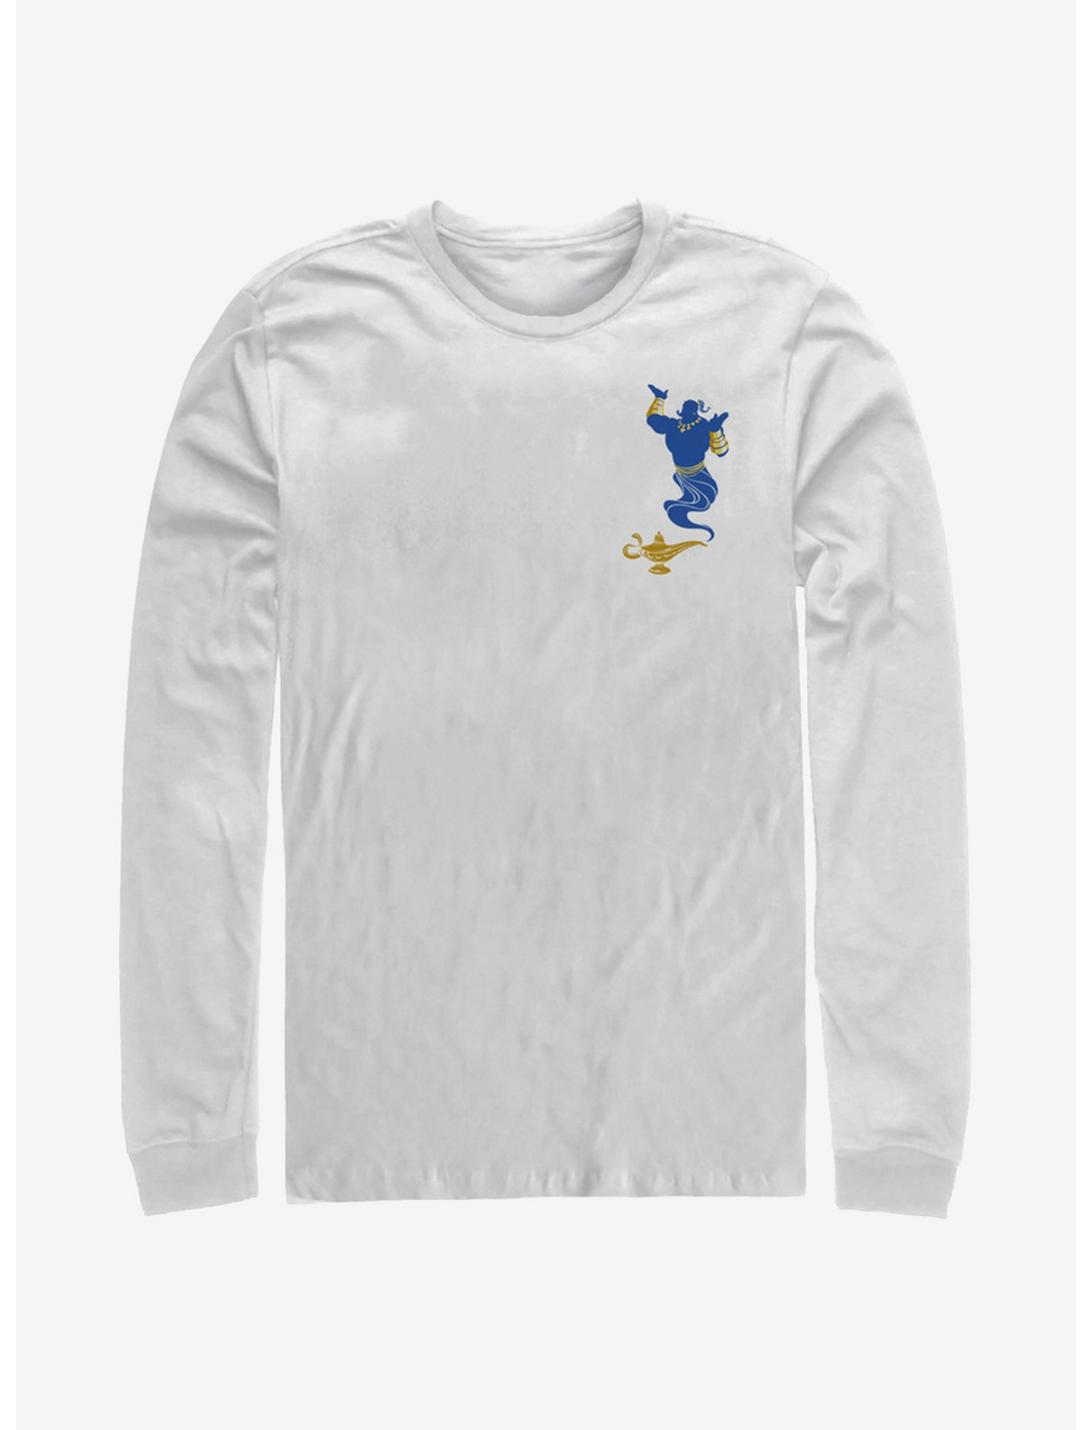 Disney Aladdin 2019 Pocket Lamp Long-Sleeve T-Shirt , WHITE, hi-res